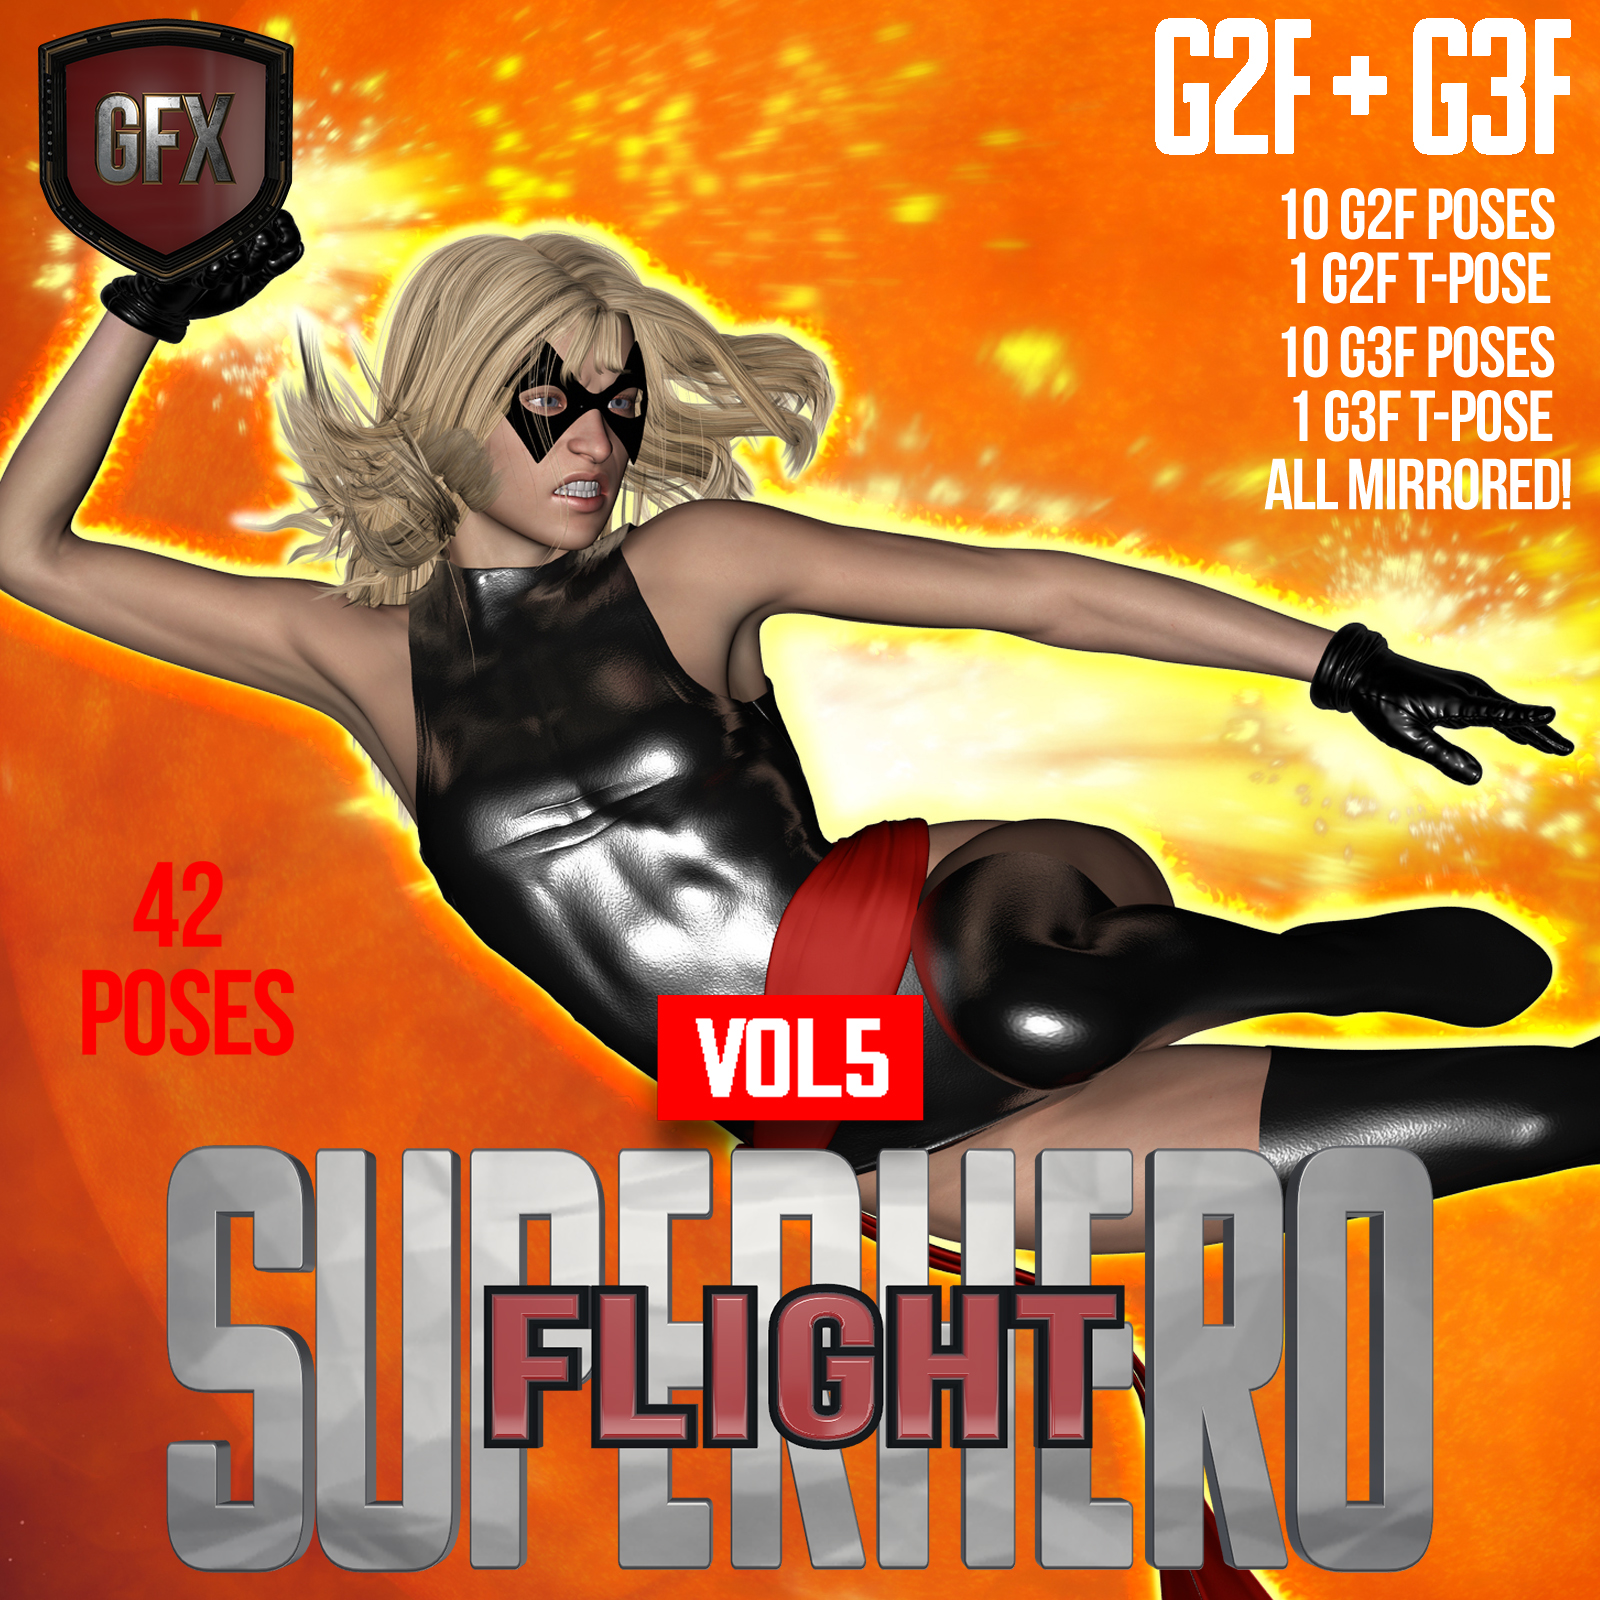 SuperHero Flight for G2F and G3F Volume 5